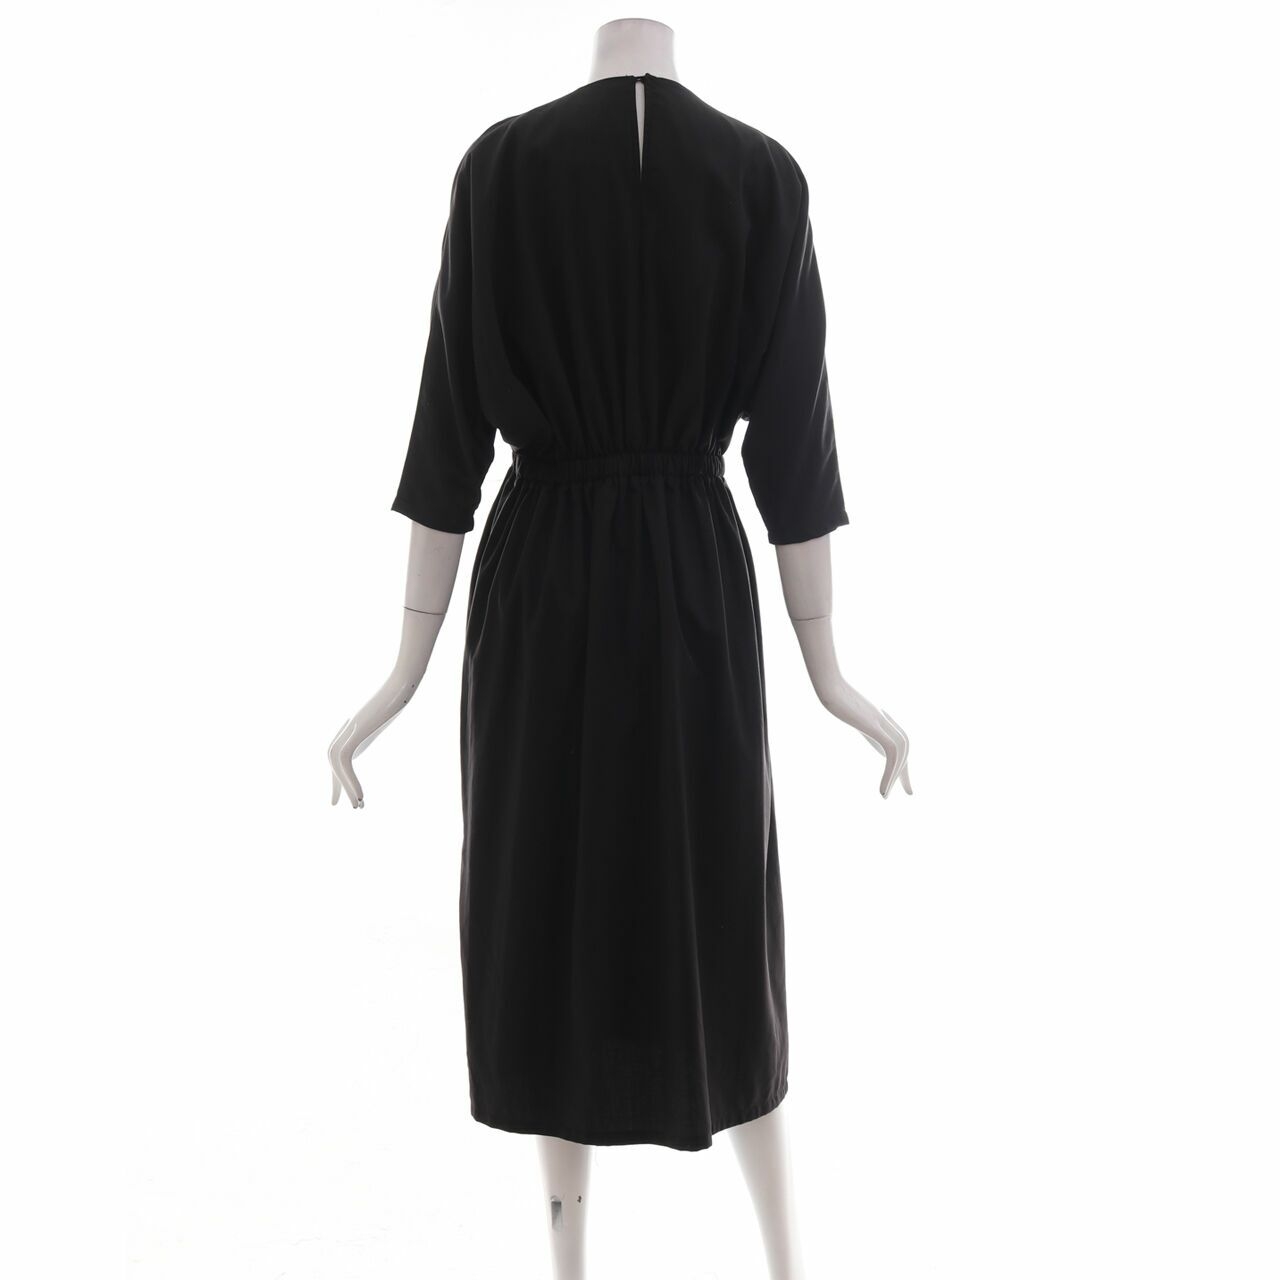 Peggy By Shop At Shopee Black Midi Dress